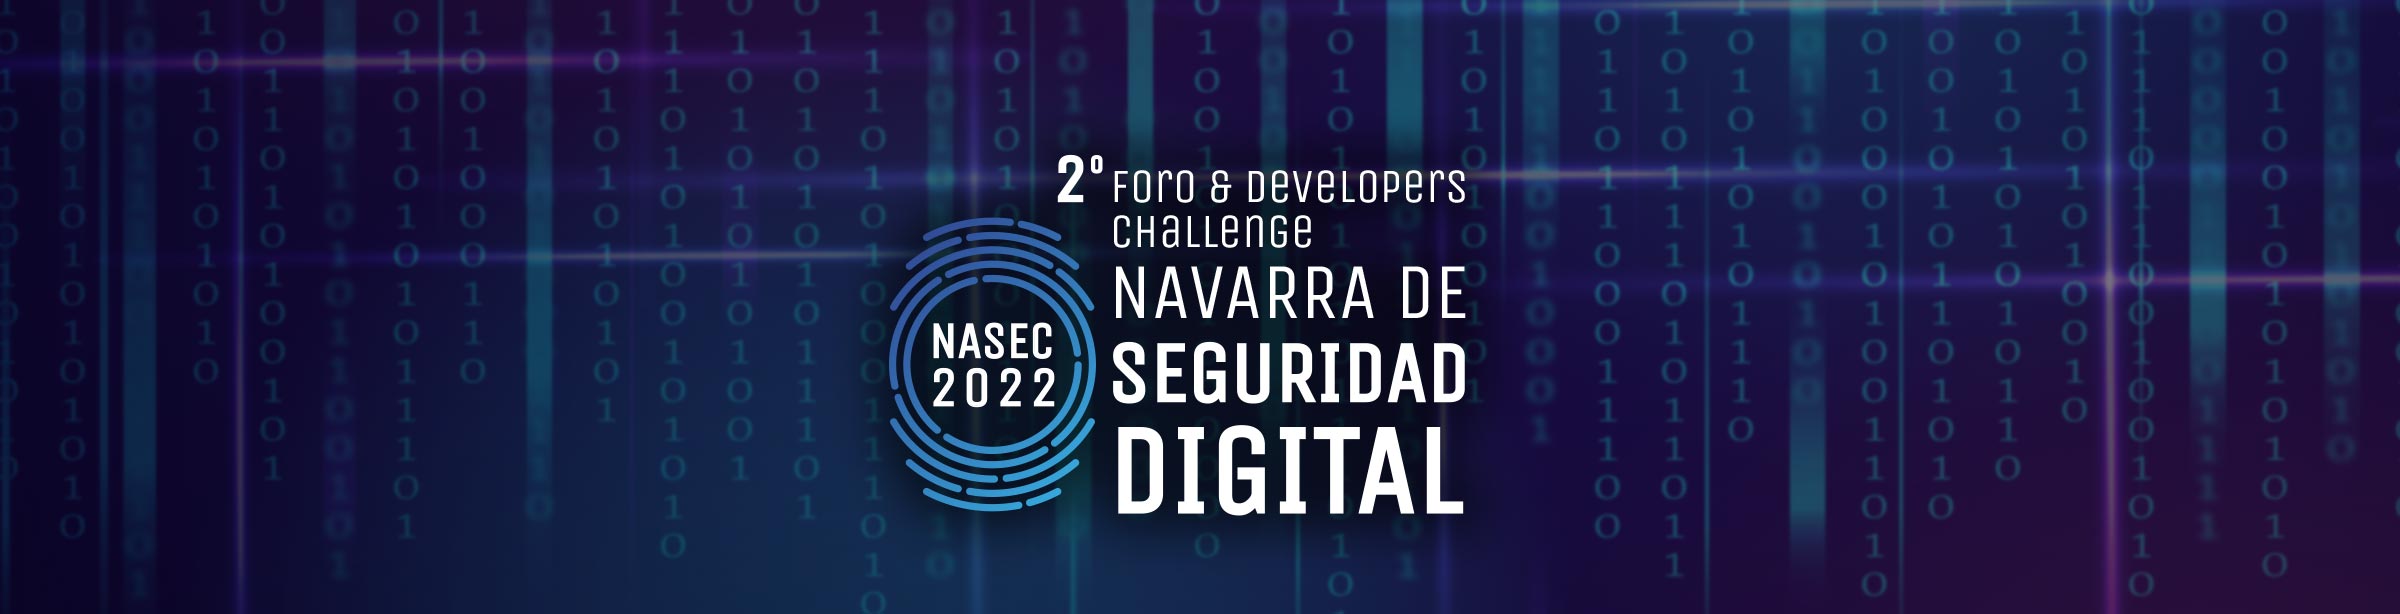 2º Foro & Developers Challenge Navarra de Seguridad Digital